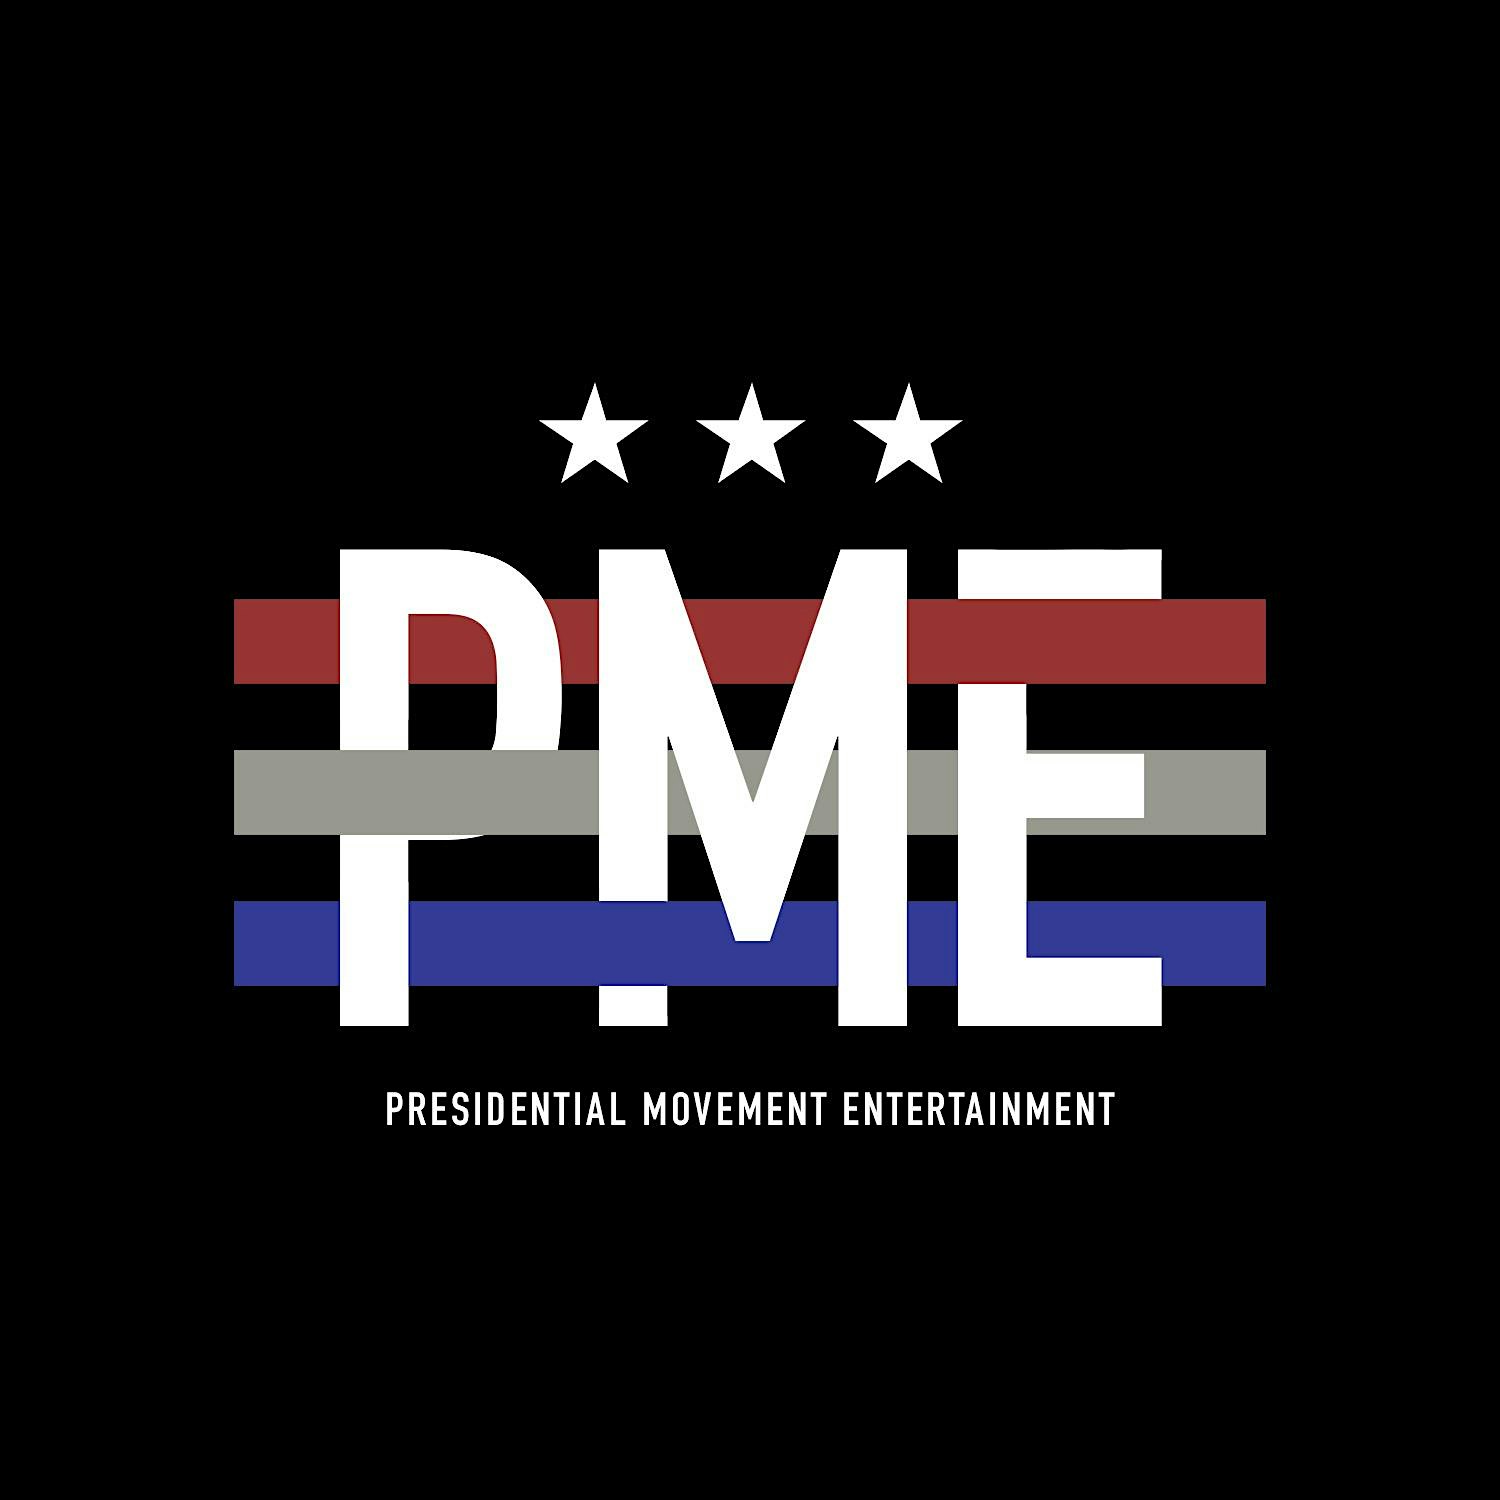 Presidential Movement Entertainment